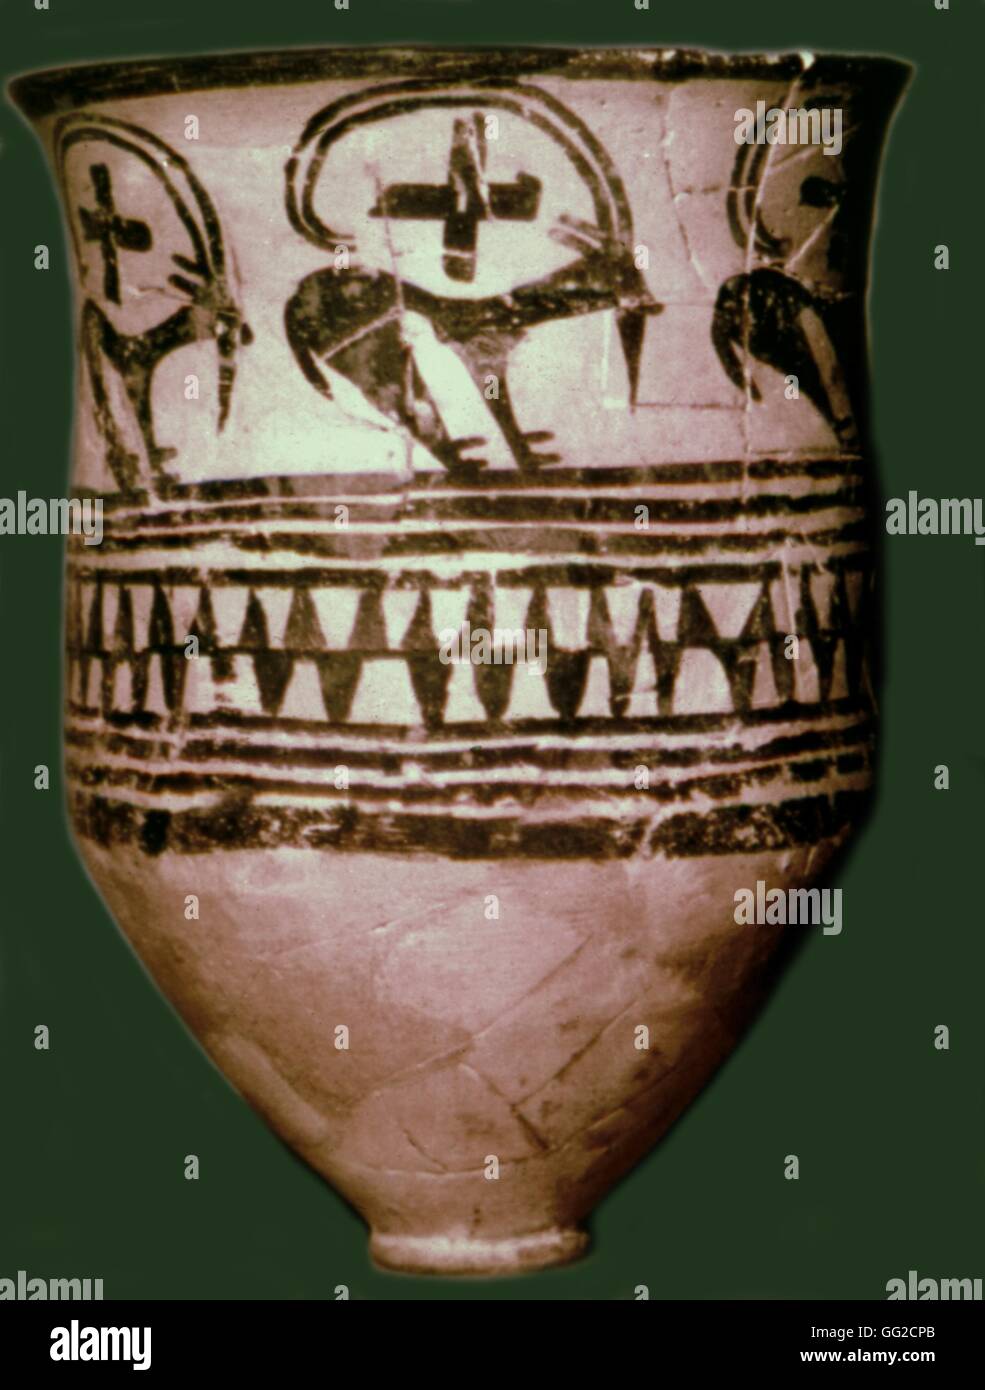 Da ceramica Tepe-Siyalk, una città che si trova a sud di Teheran IV millennio a.c. Mesopotamia museo archeologico di Ankara Foto Stock